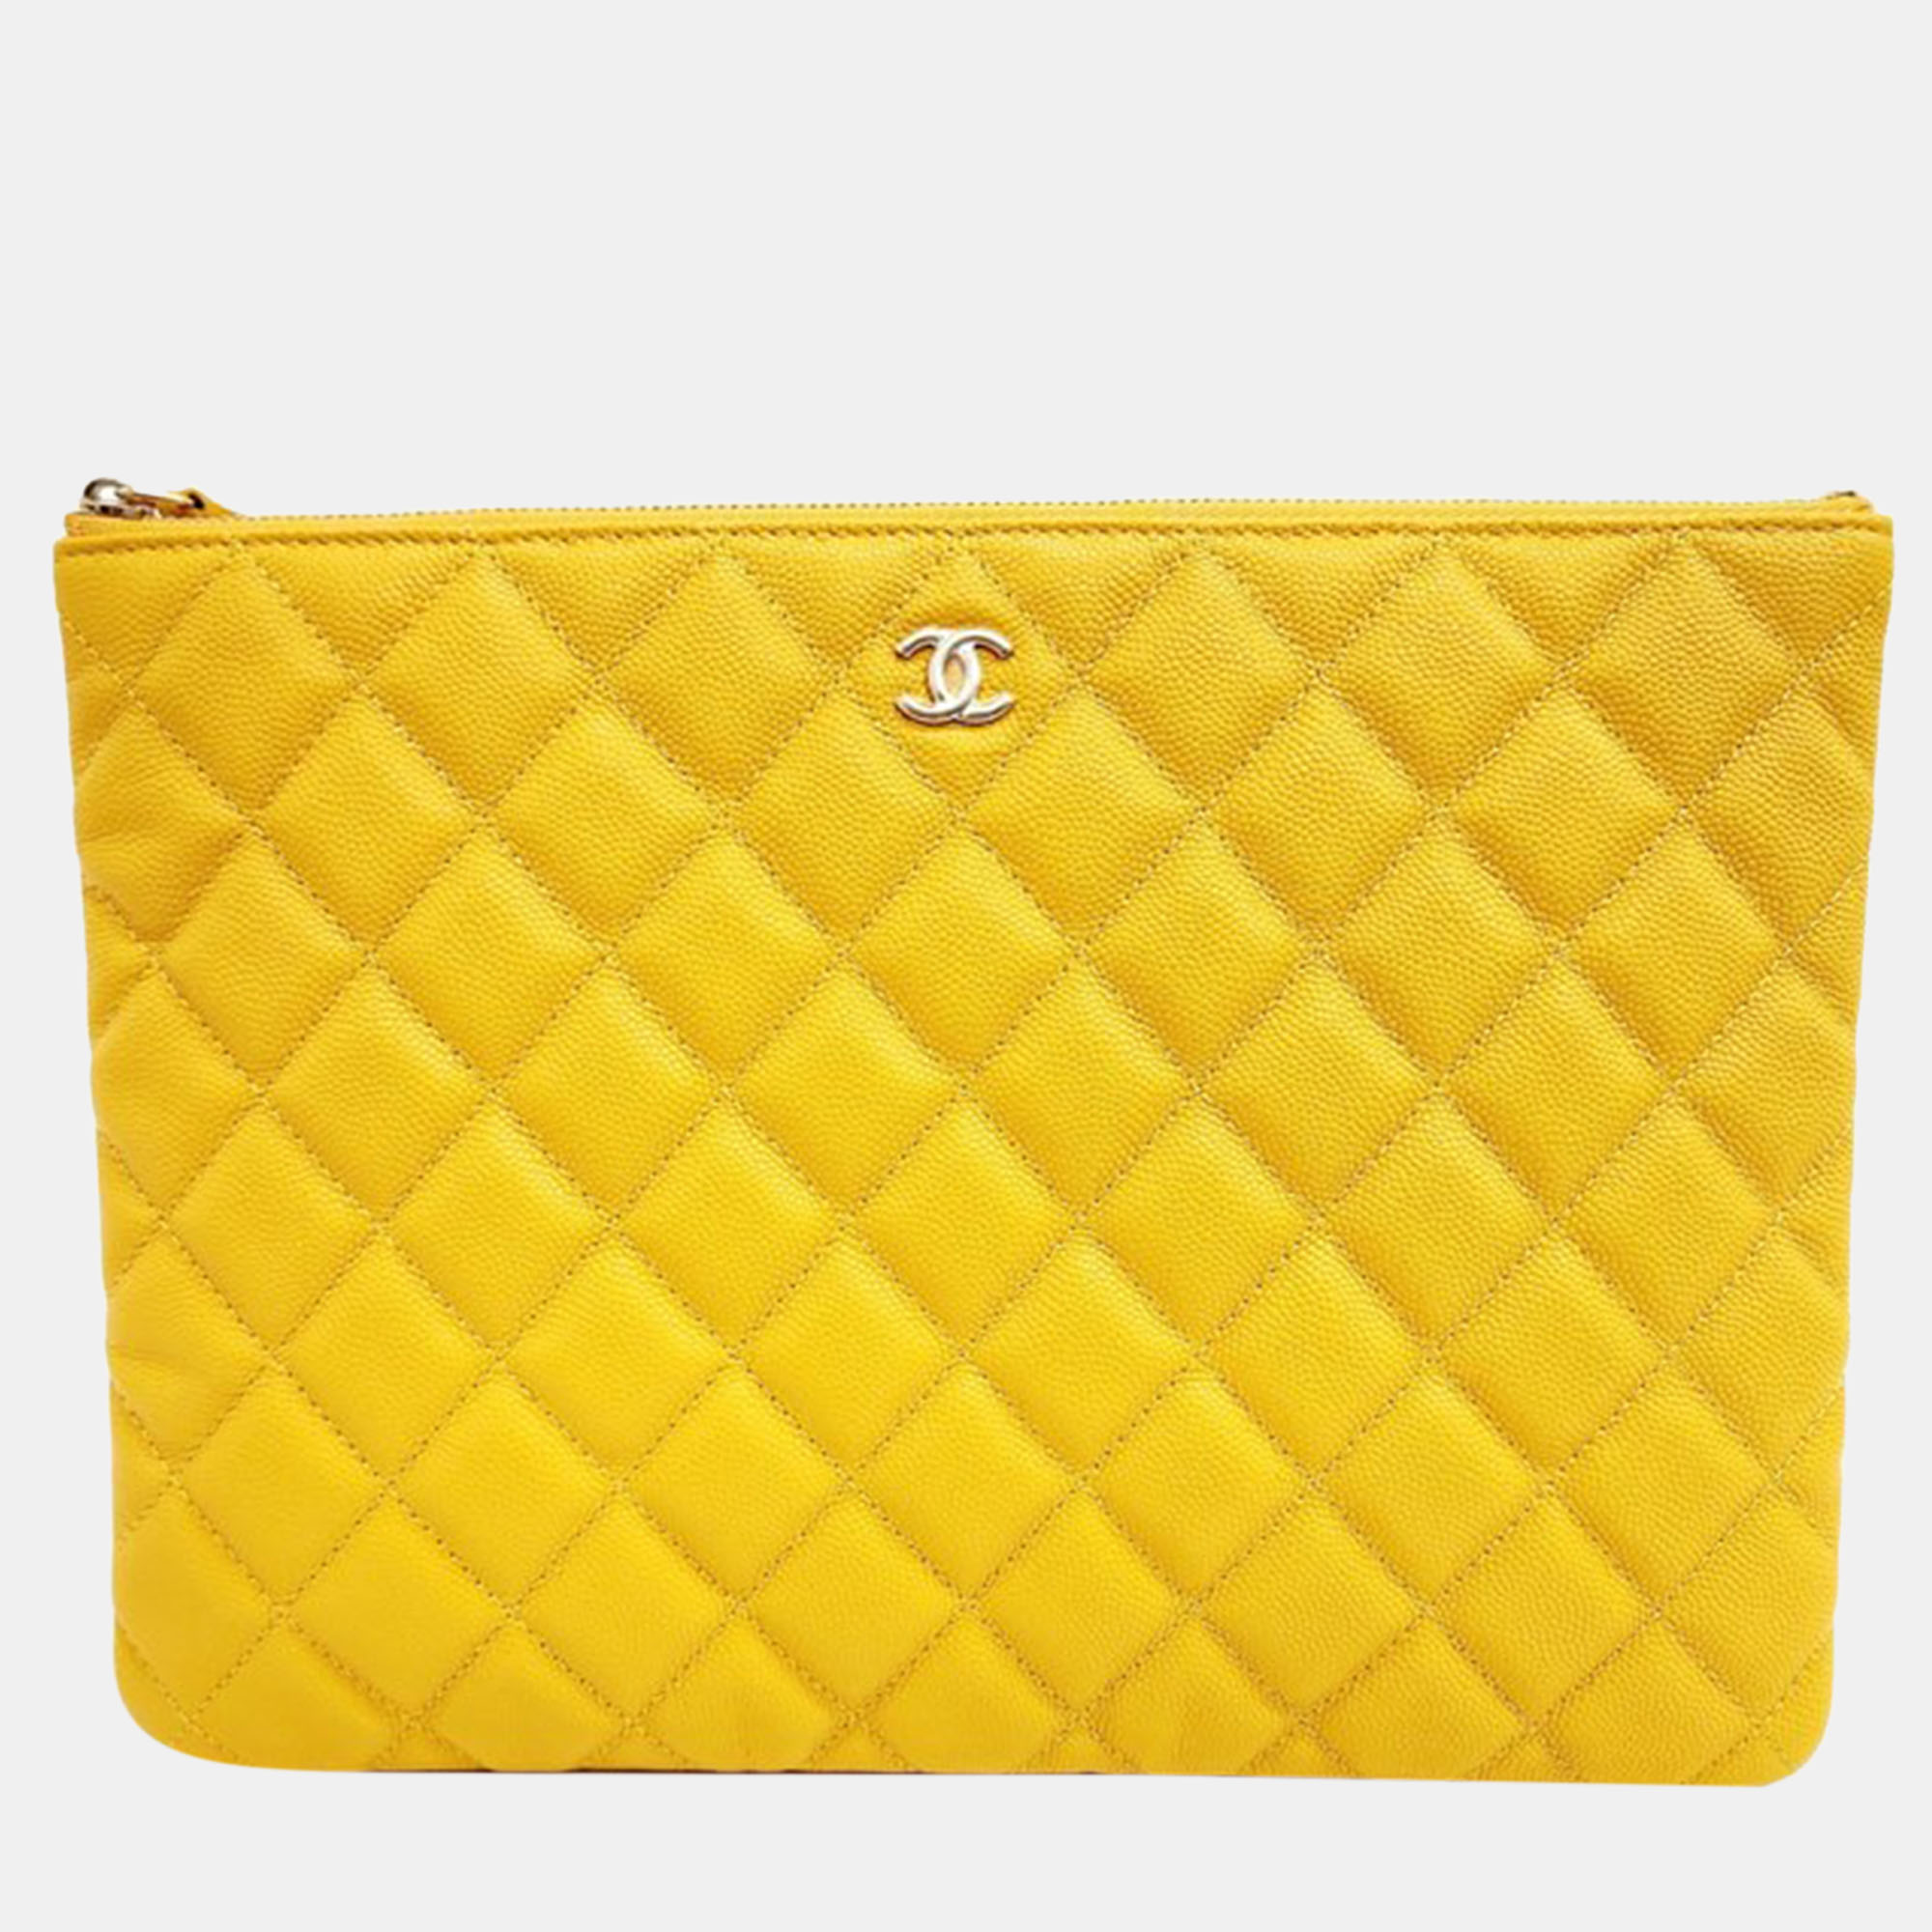 Chanel yellow caviar leather medium clutch bag